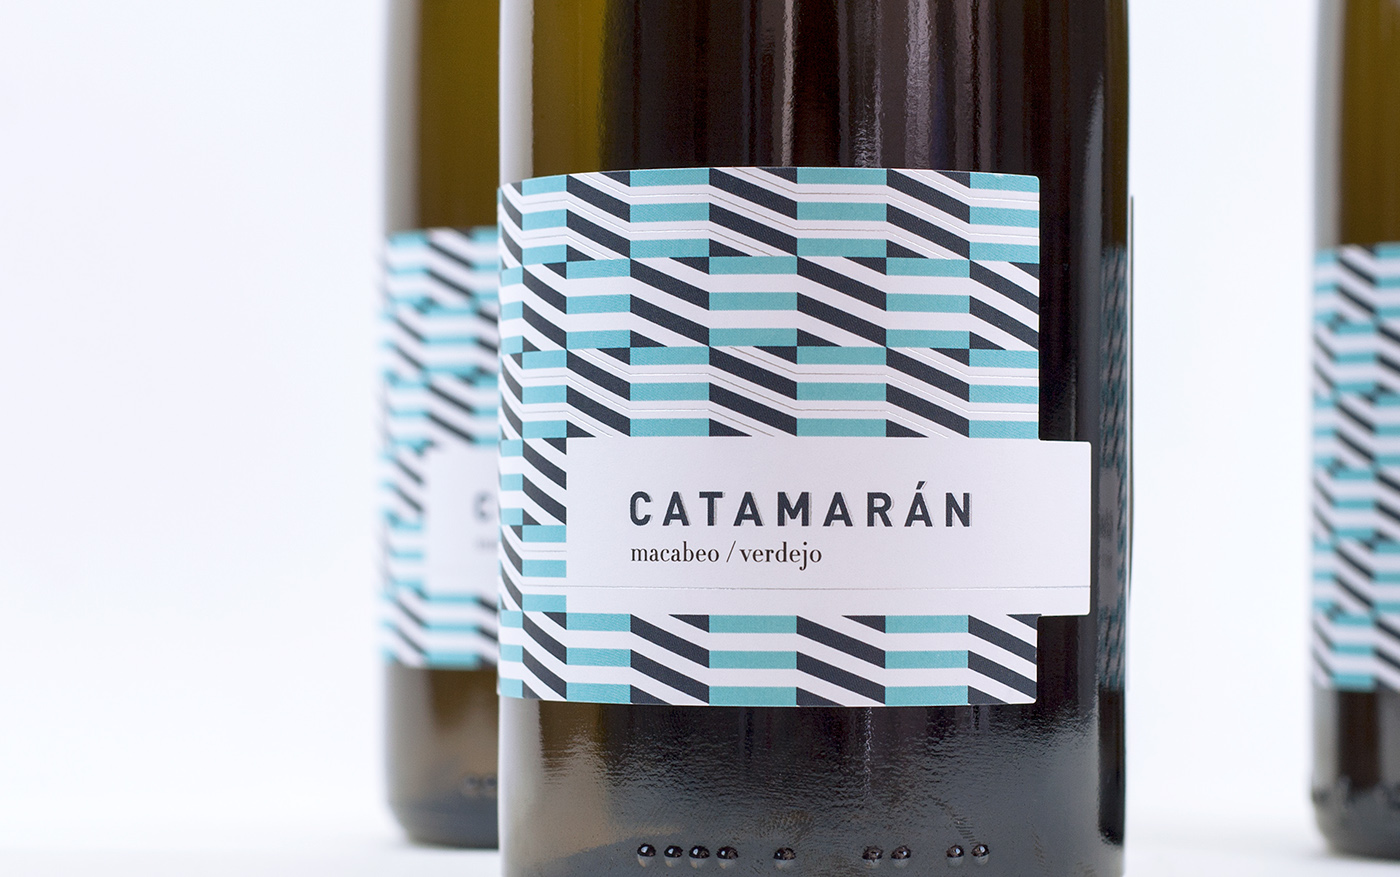 wine vino catamaran White Wine sparkle bodega Viña brandsummit etiqueta Label